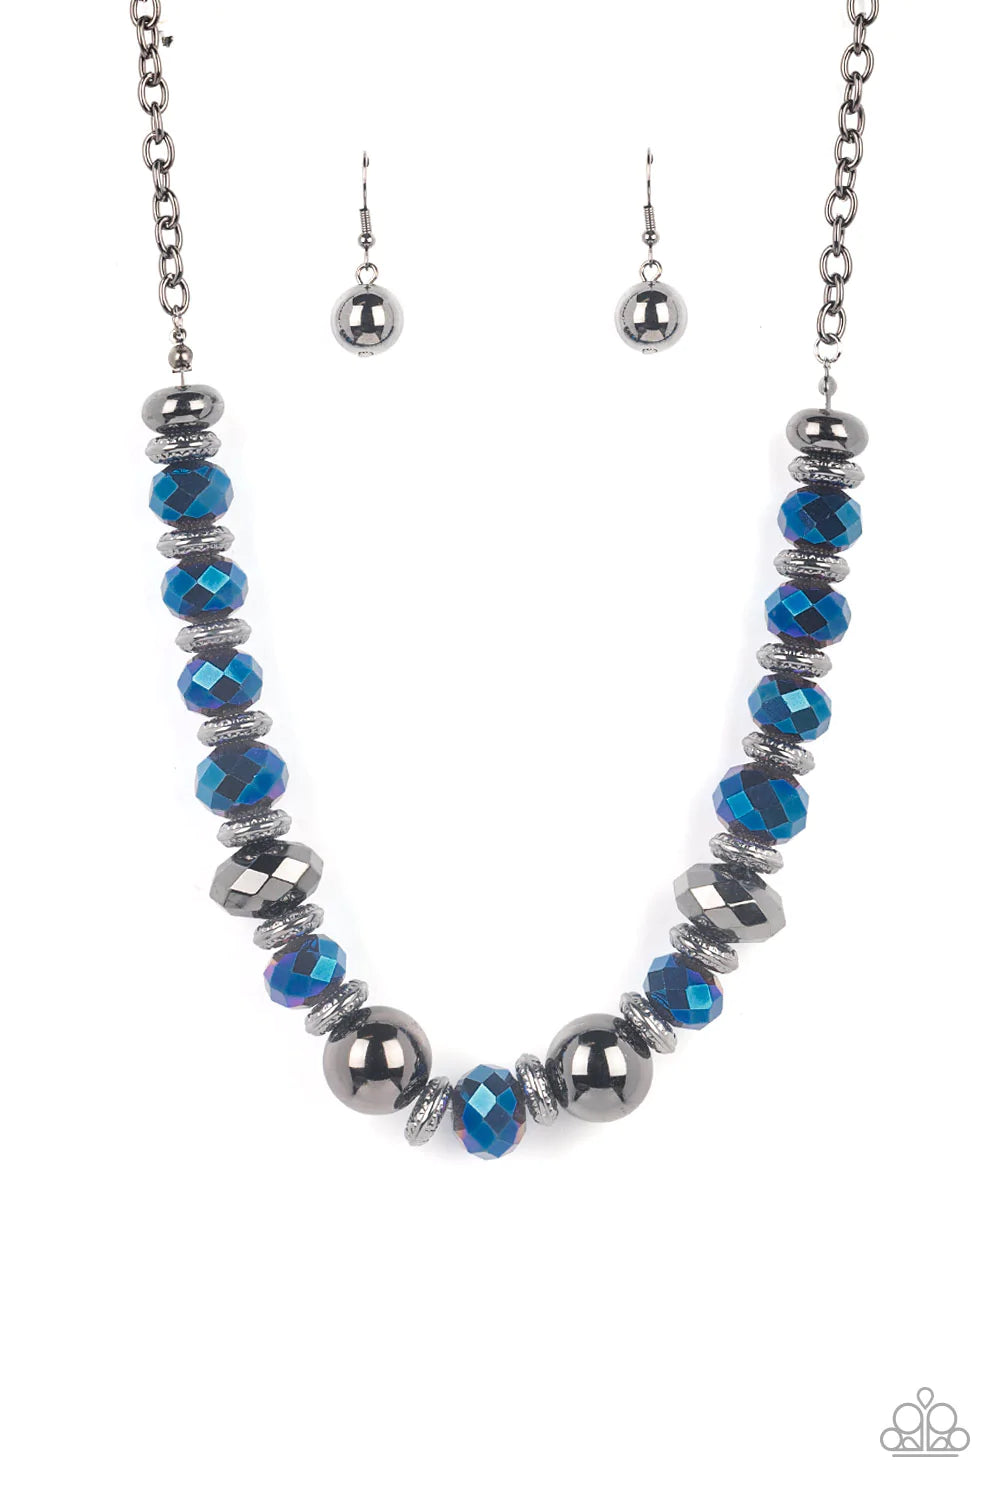 Interstellar Influencer ♥ Blue Necklace ♥ Paparazzi Accessories - GlaMarous Titi Jewels